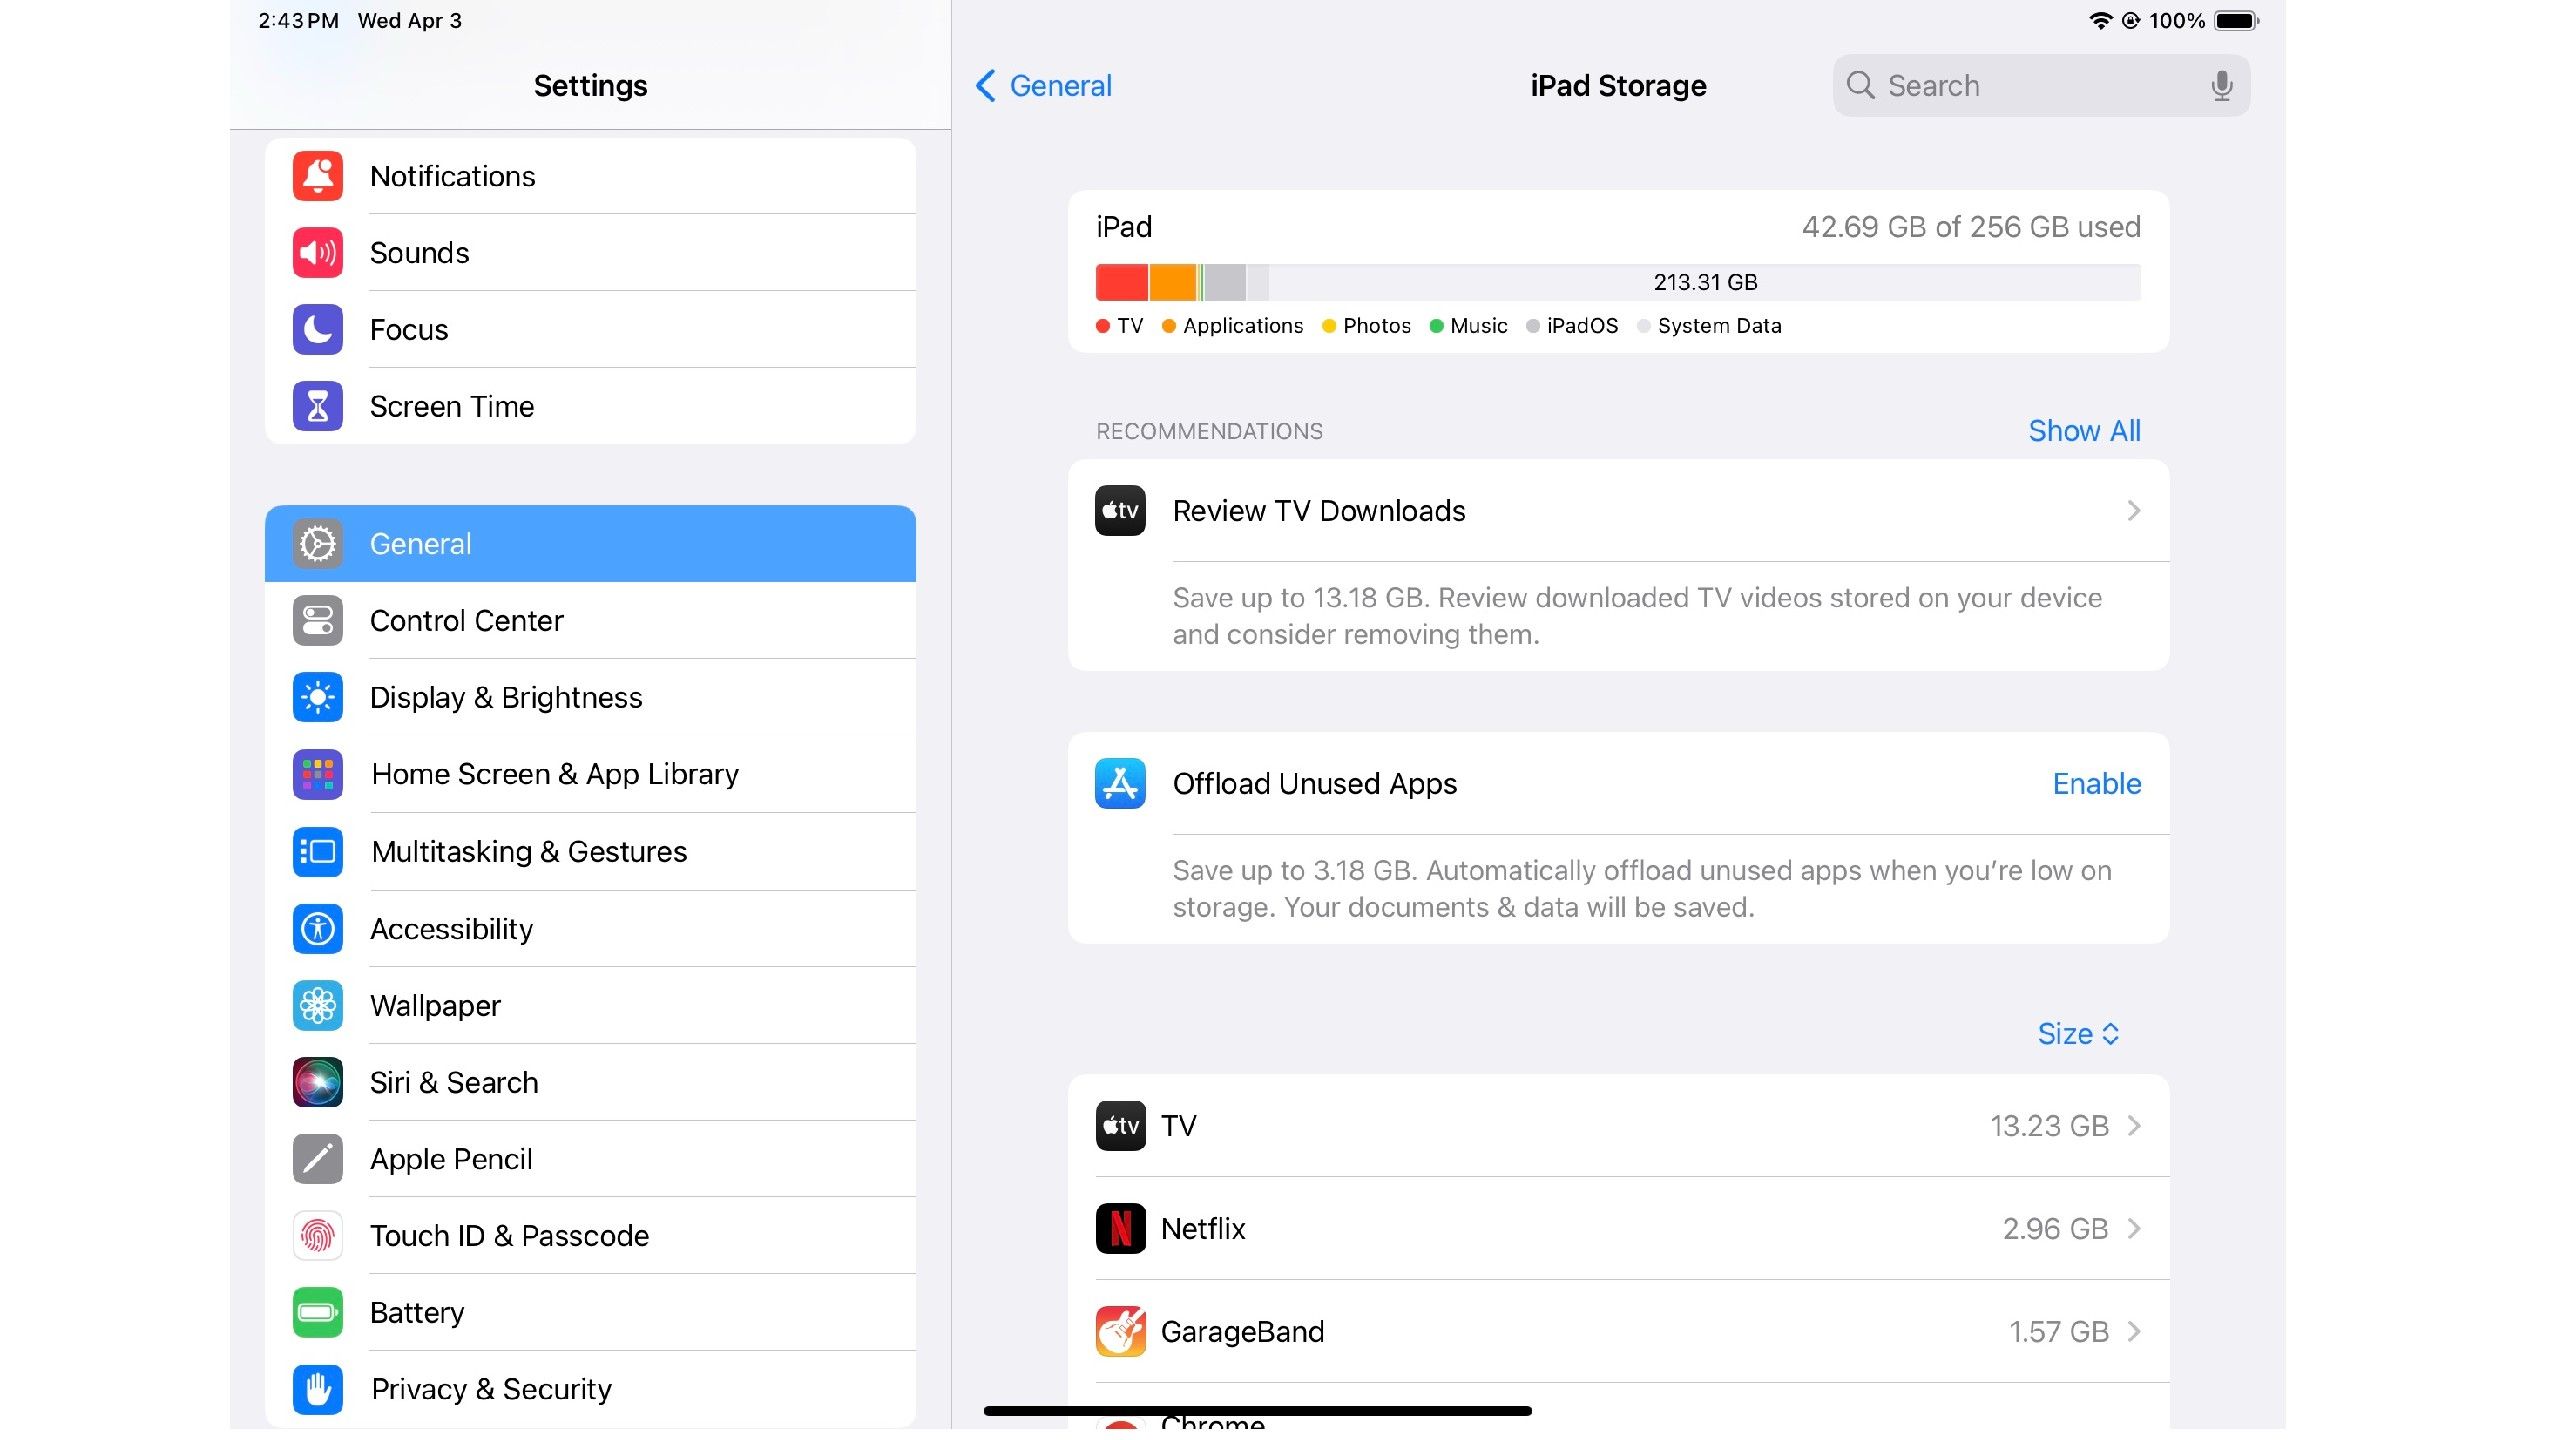 ipad storage to delete large apps